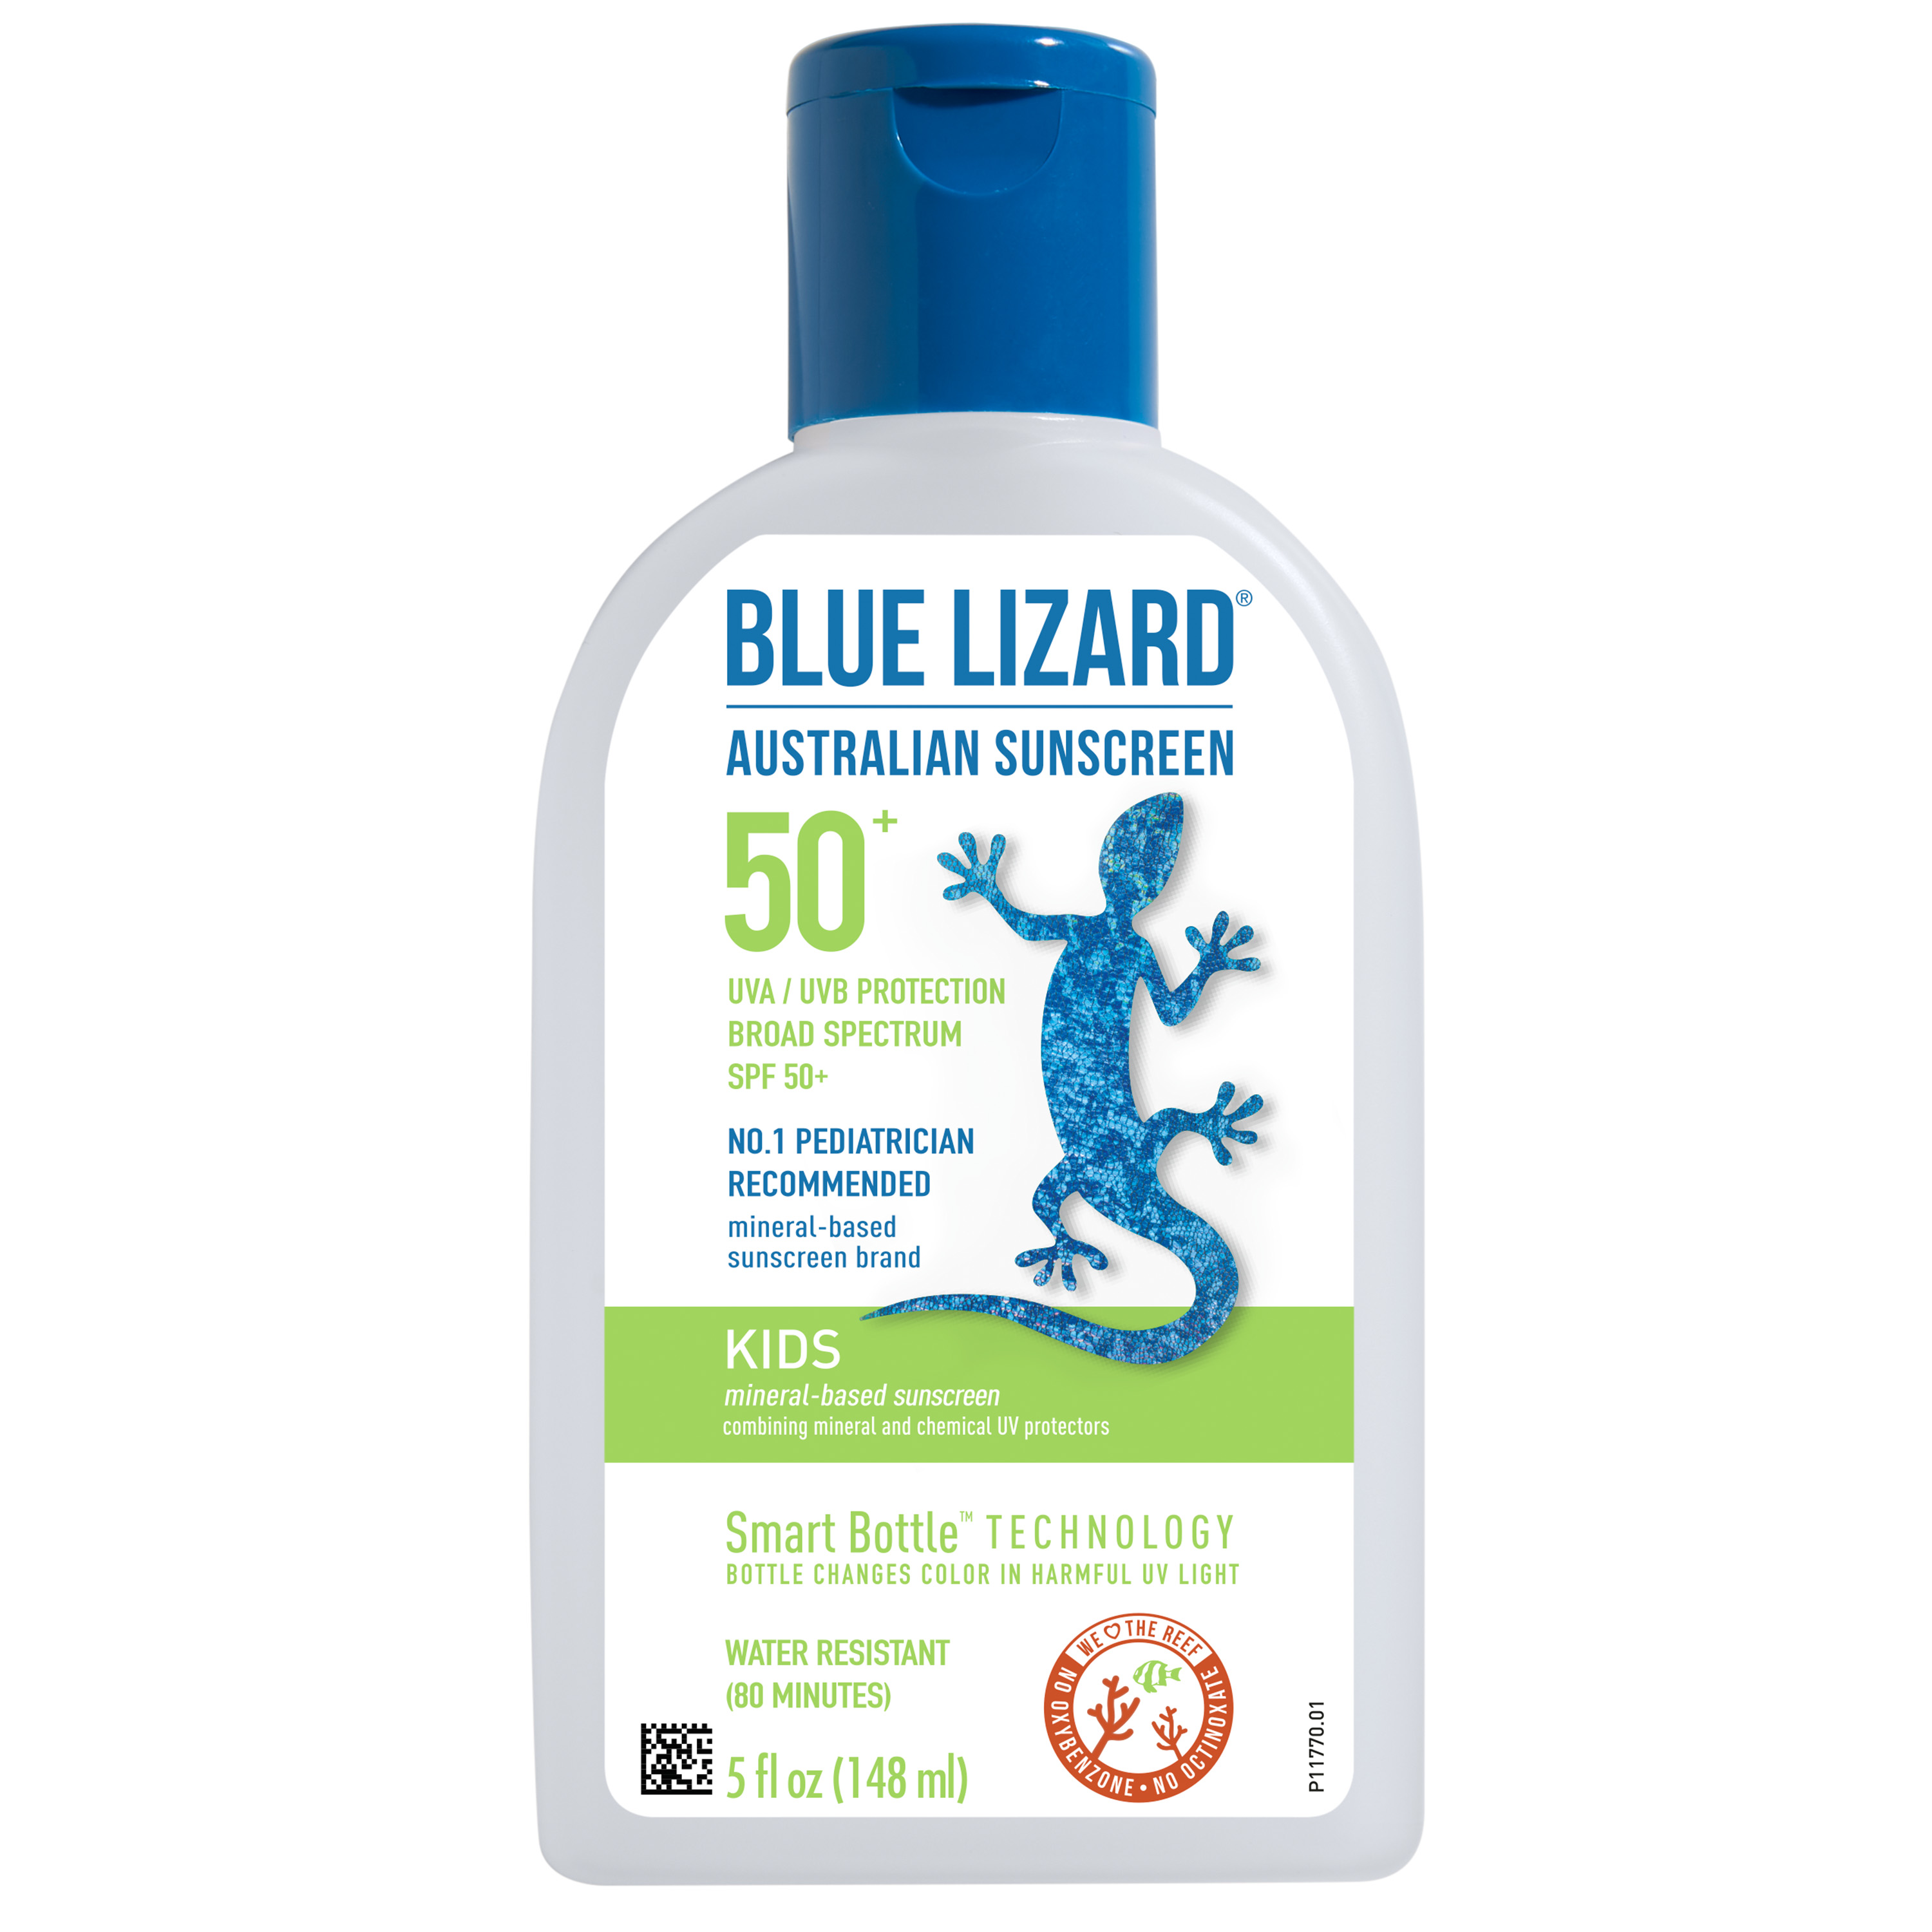 Blue Lizard Kids SPF 50+ Mineral-Based Sunscreen Lotion, Broad Spectrum, 5 fl oz - image 1 of 9